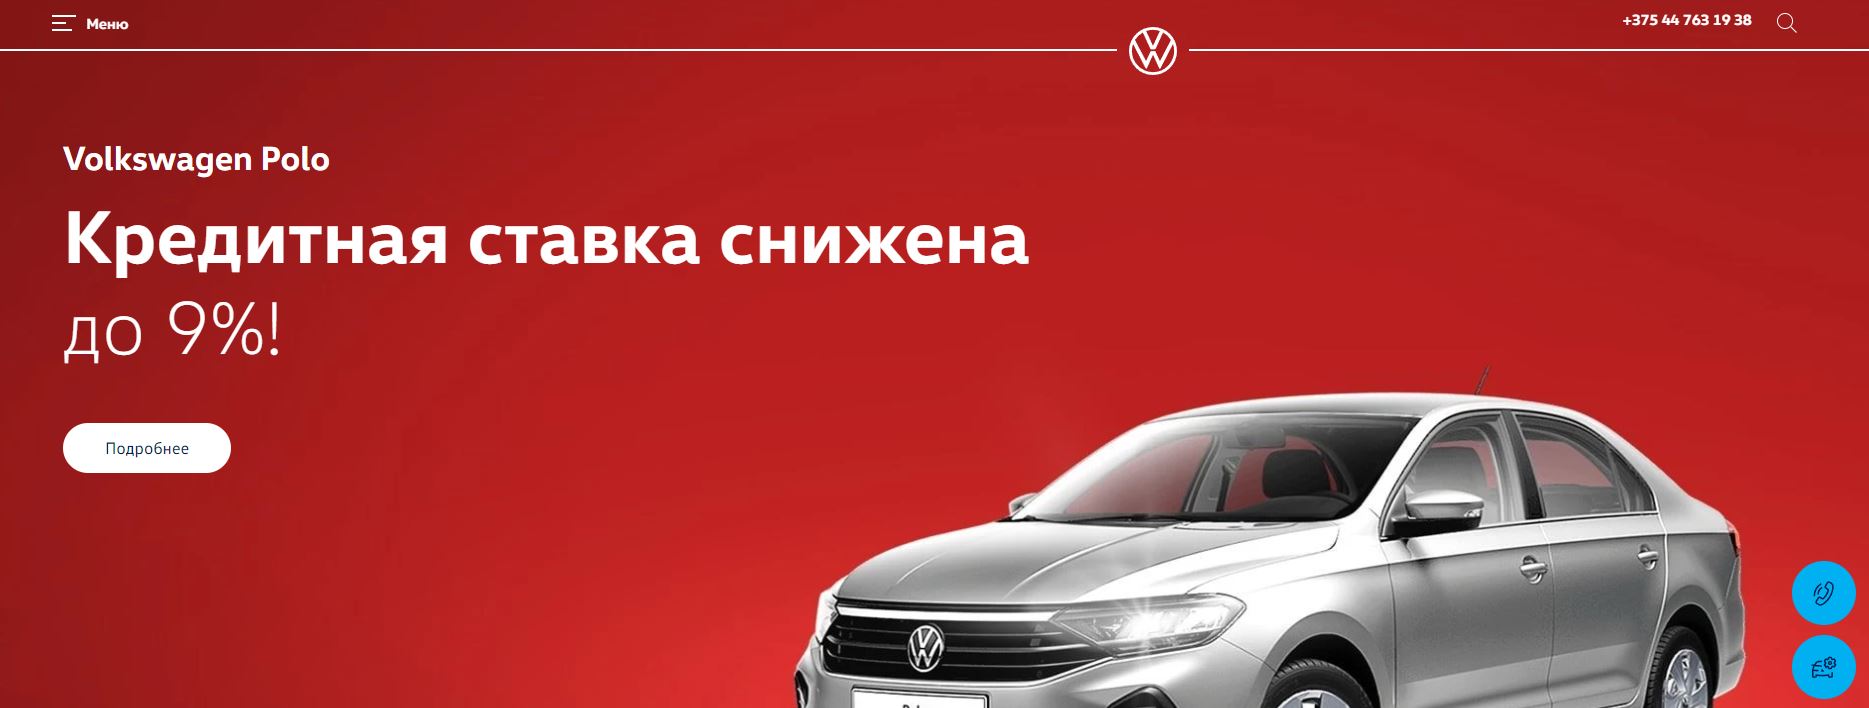 Volkswagen minsk.by – официальный сайт, тест-драйв